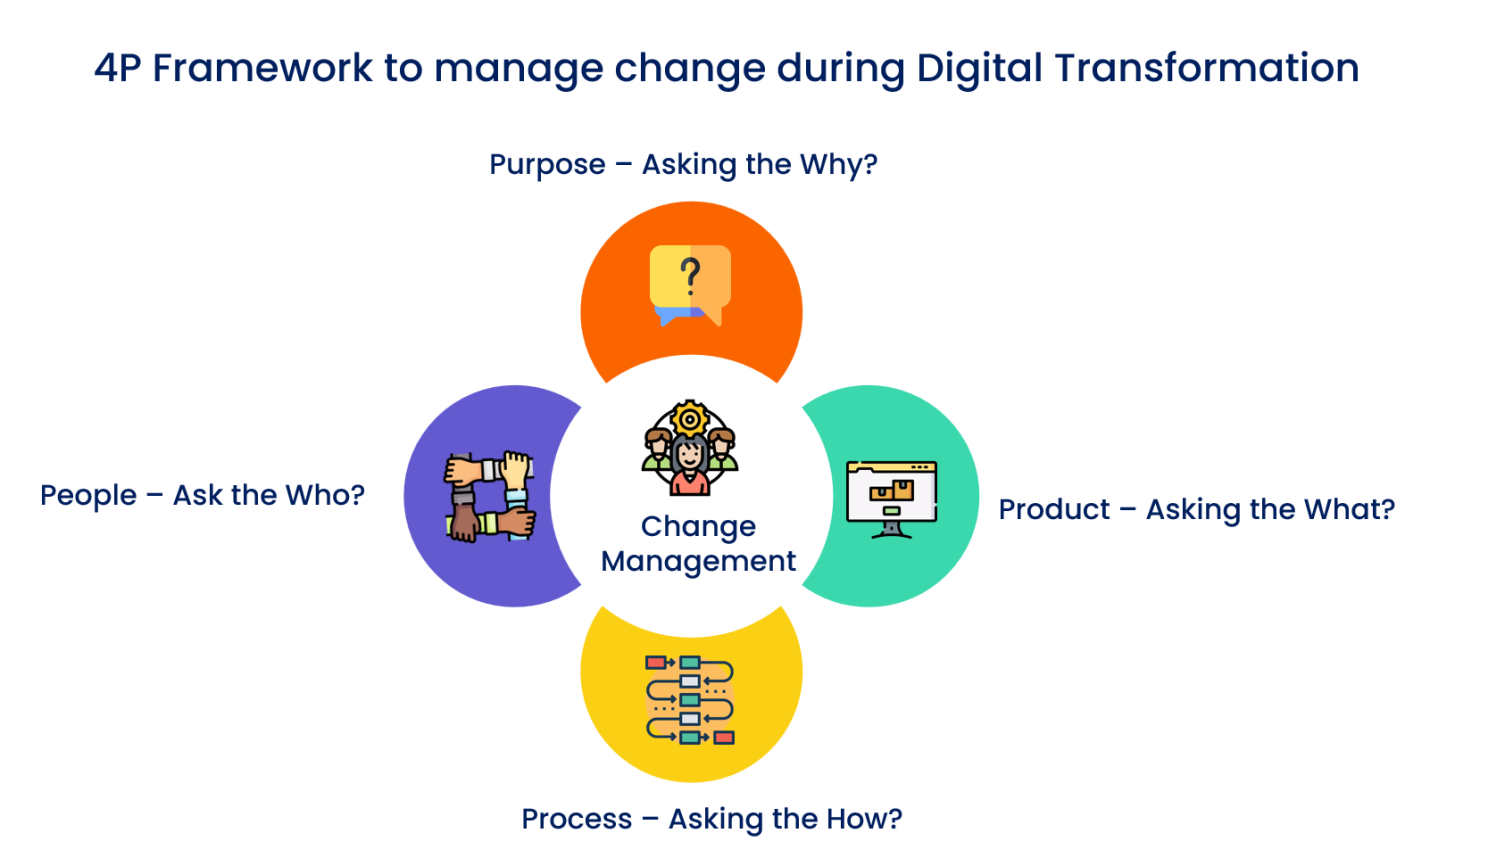 The 4P framework to manage change during digital transformation